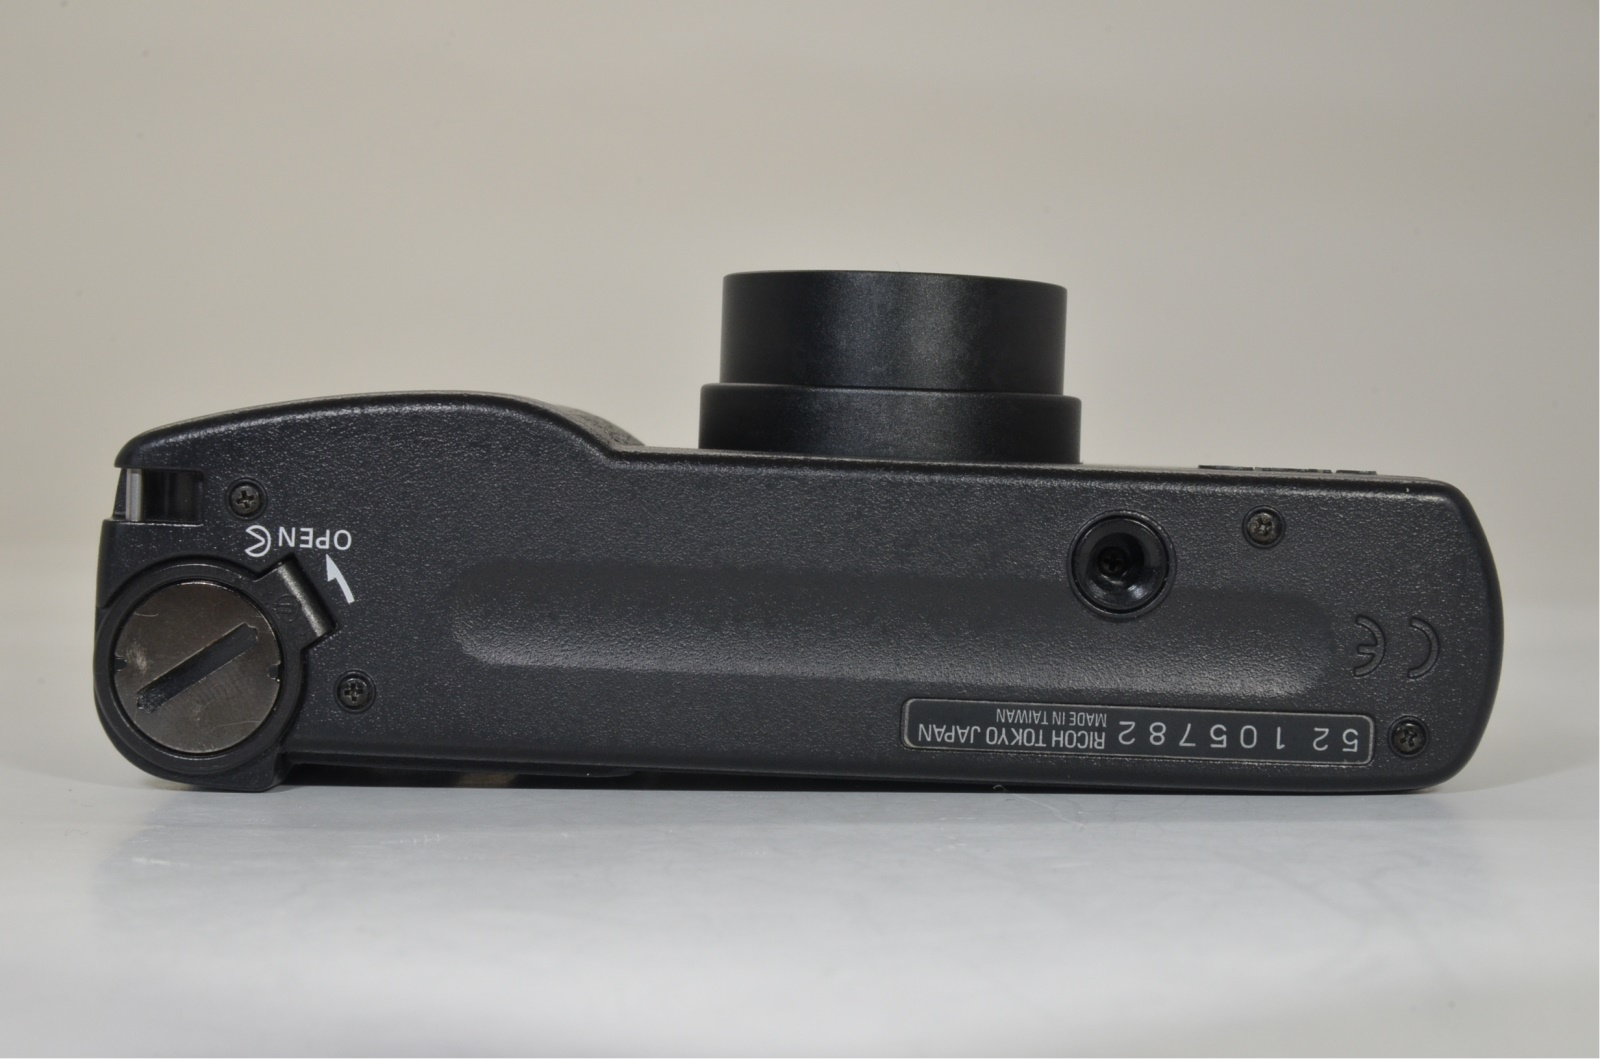 ricoh gr1v black 28mm f2.8 point & shoot film camera shooting tested